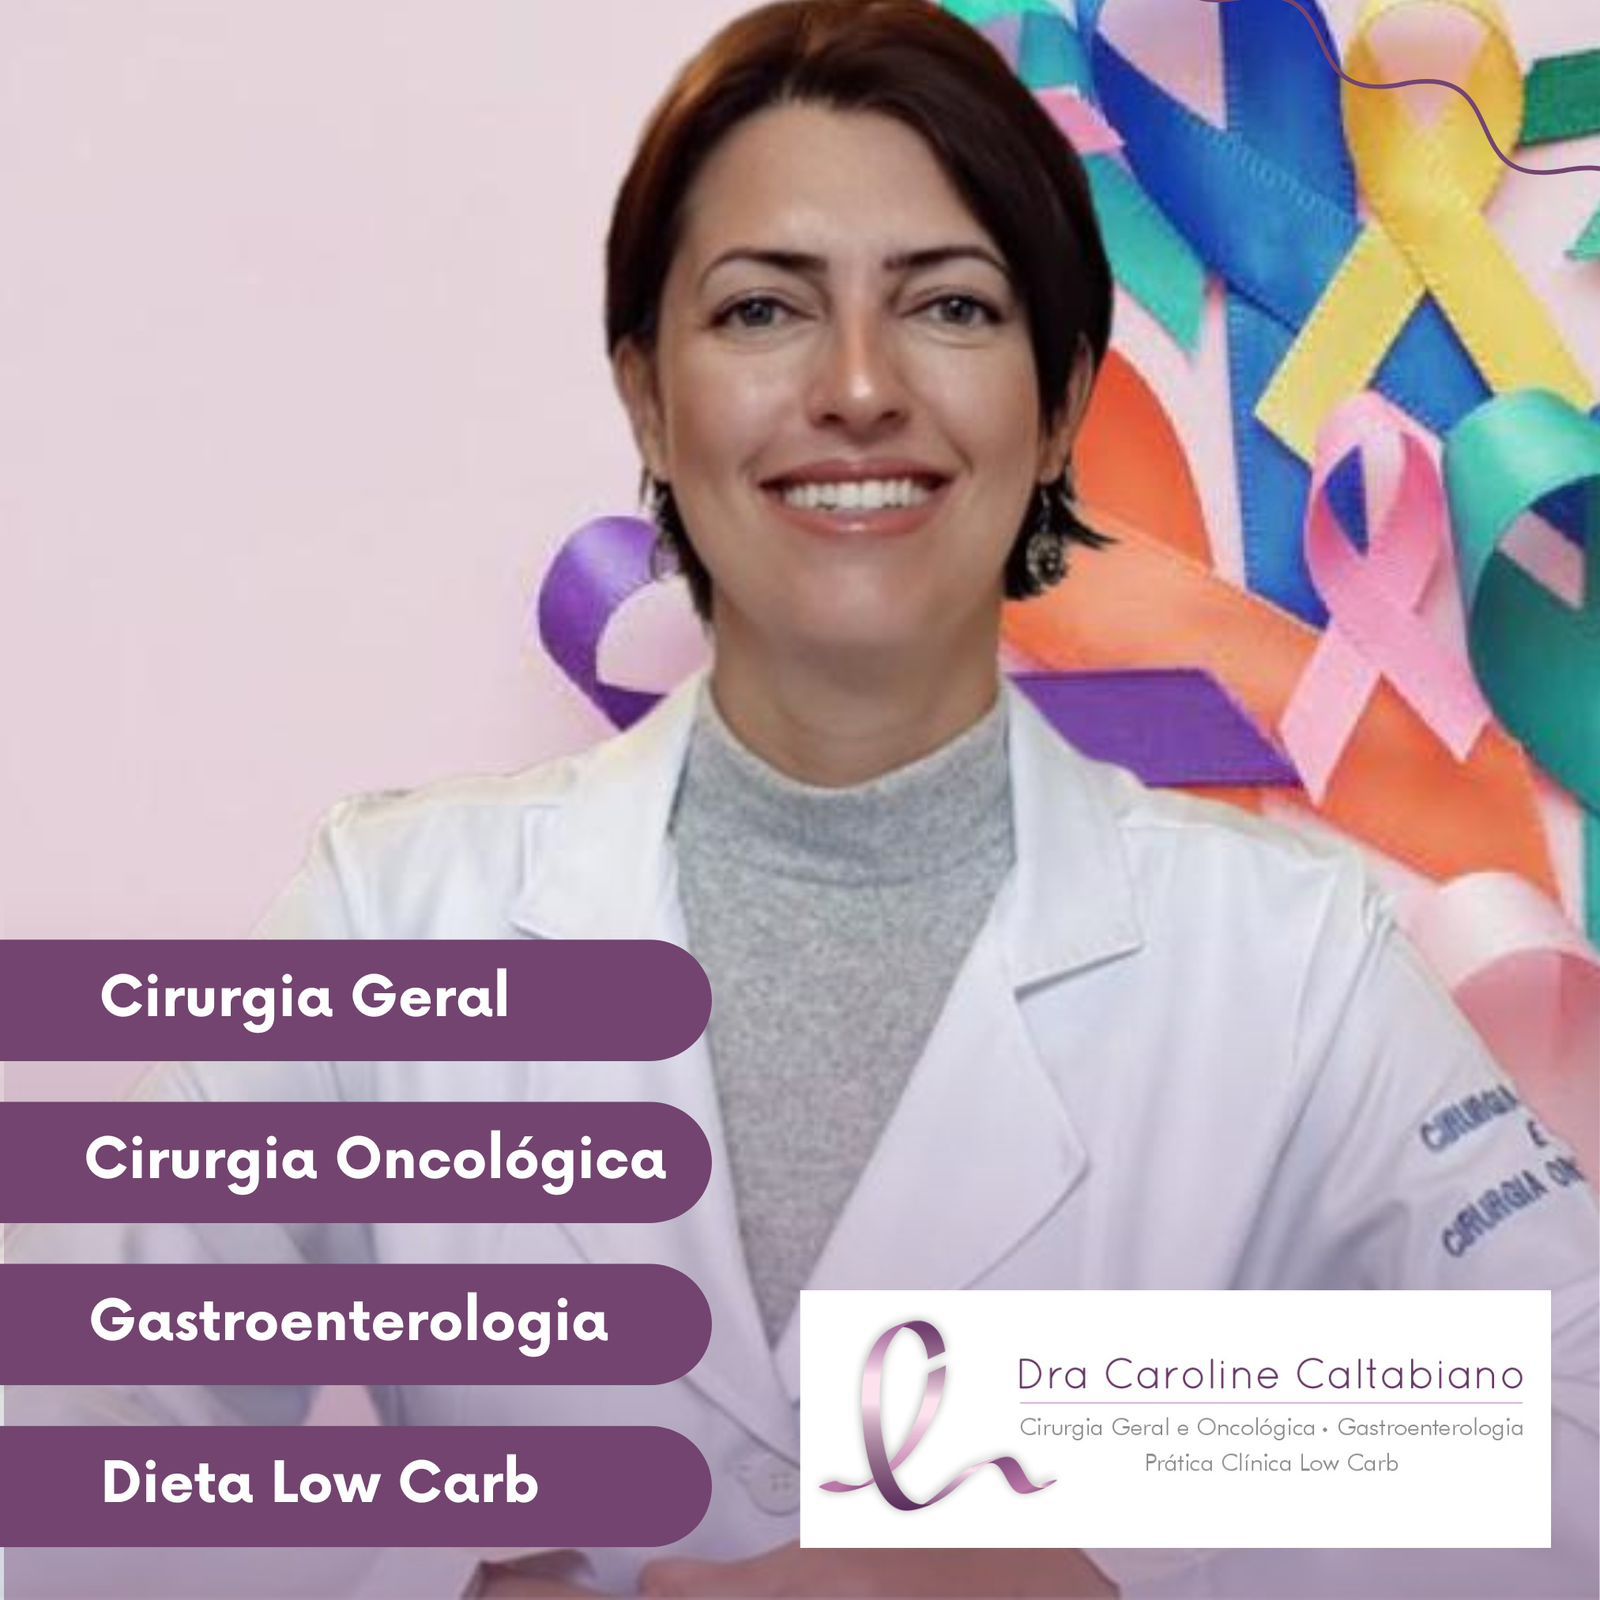 Dra. Caroline Caltabiano